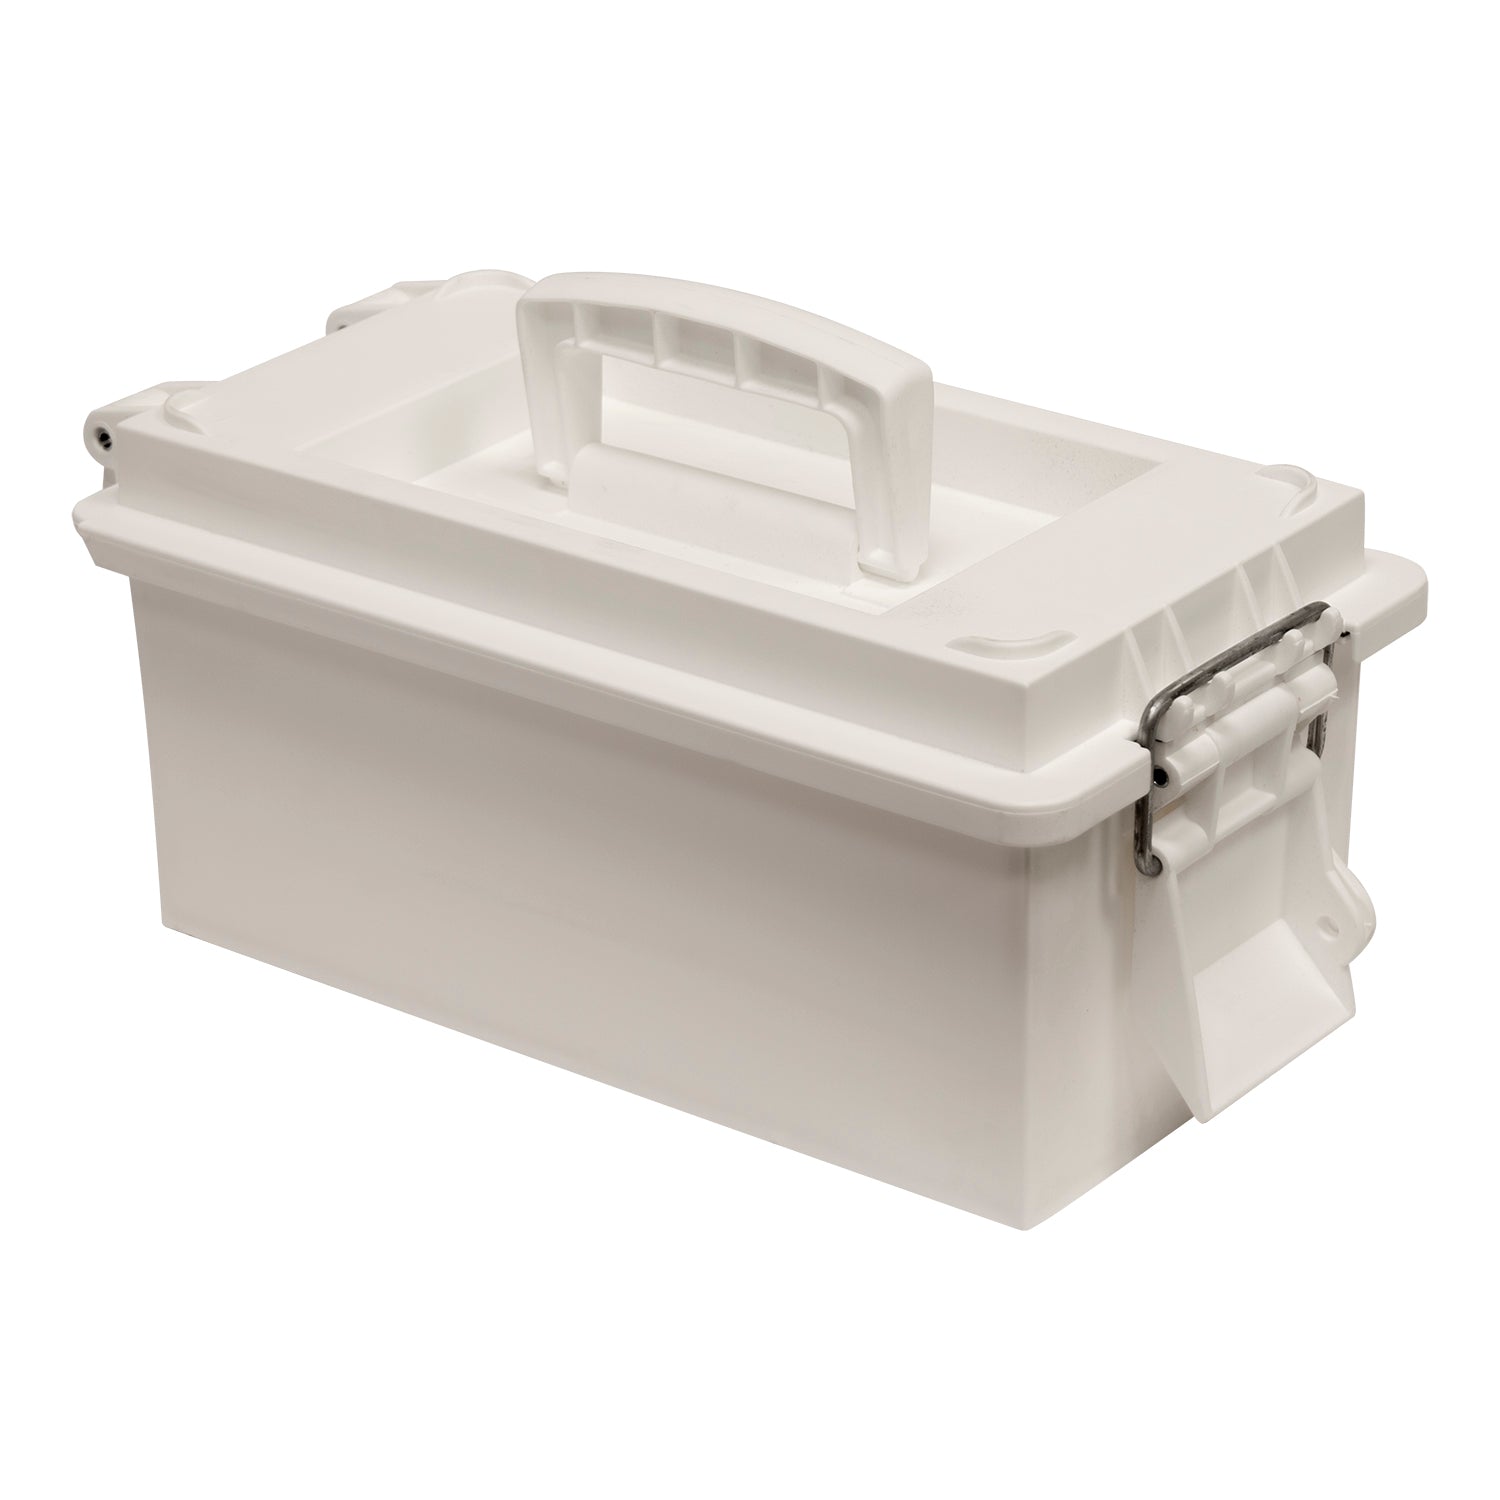 Wise 5601 Small Utility Dry Box – Boatseats